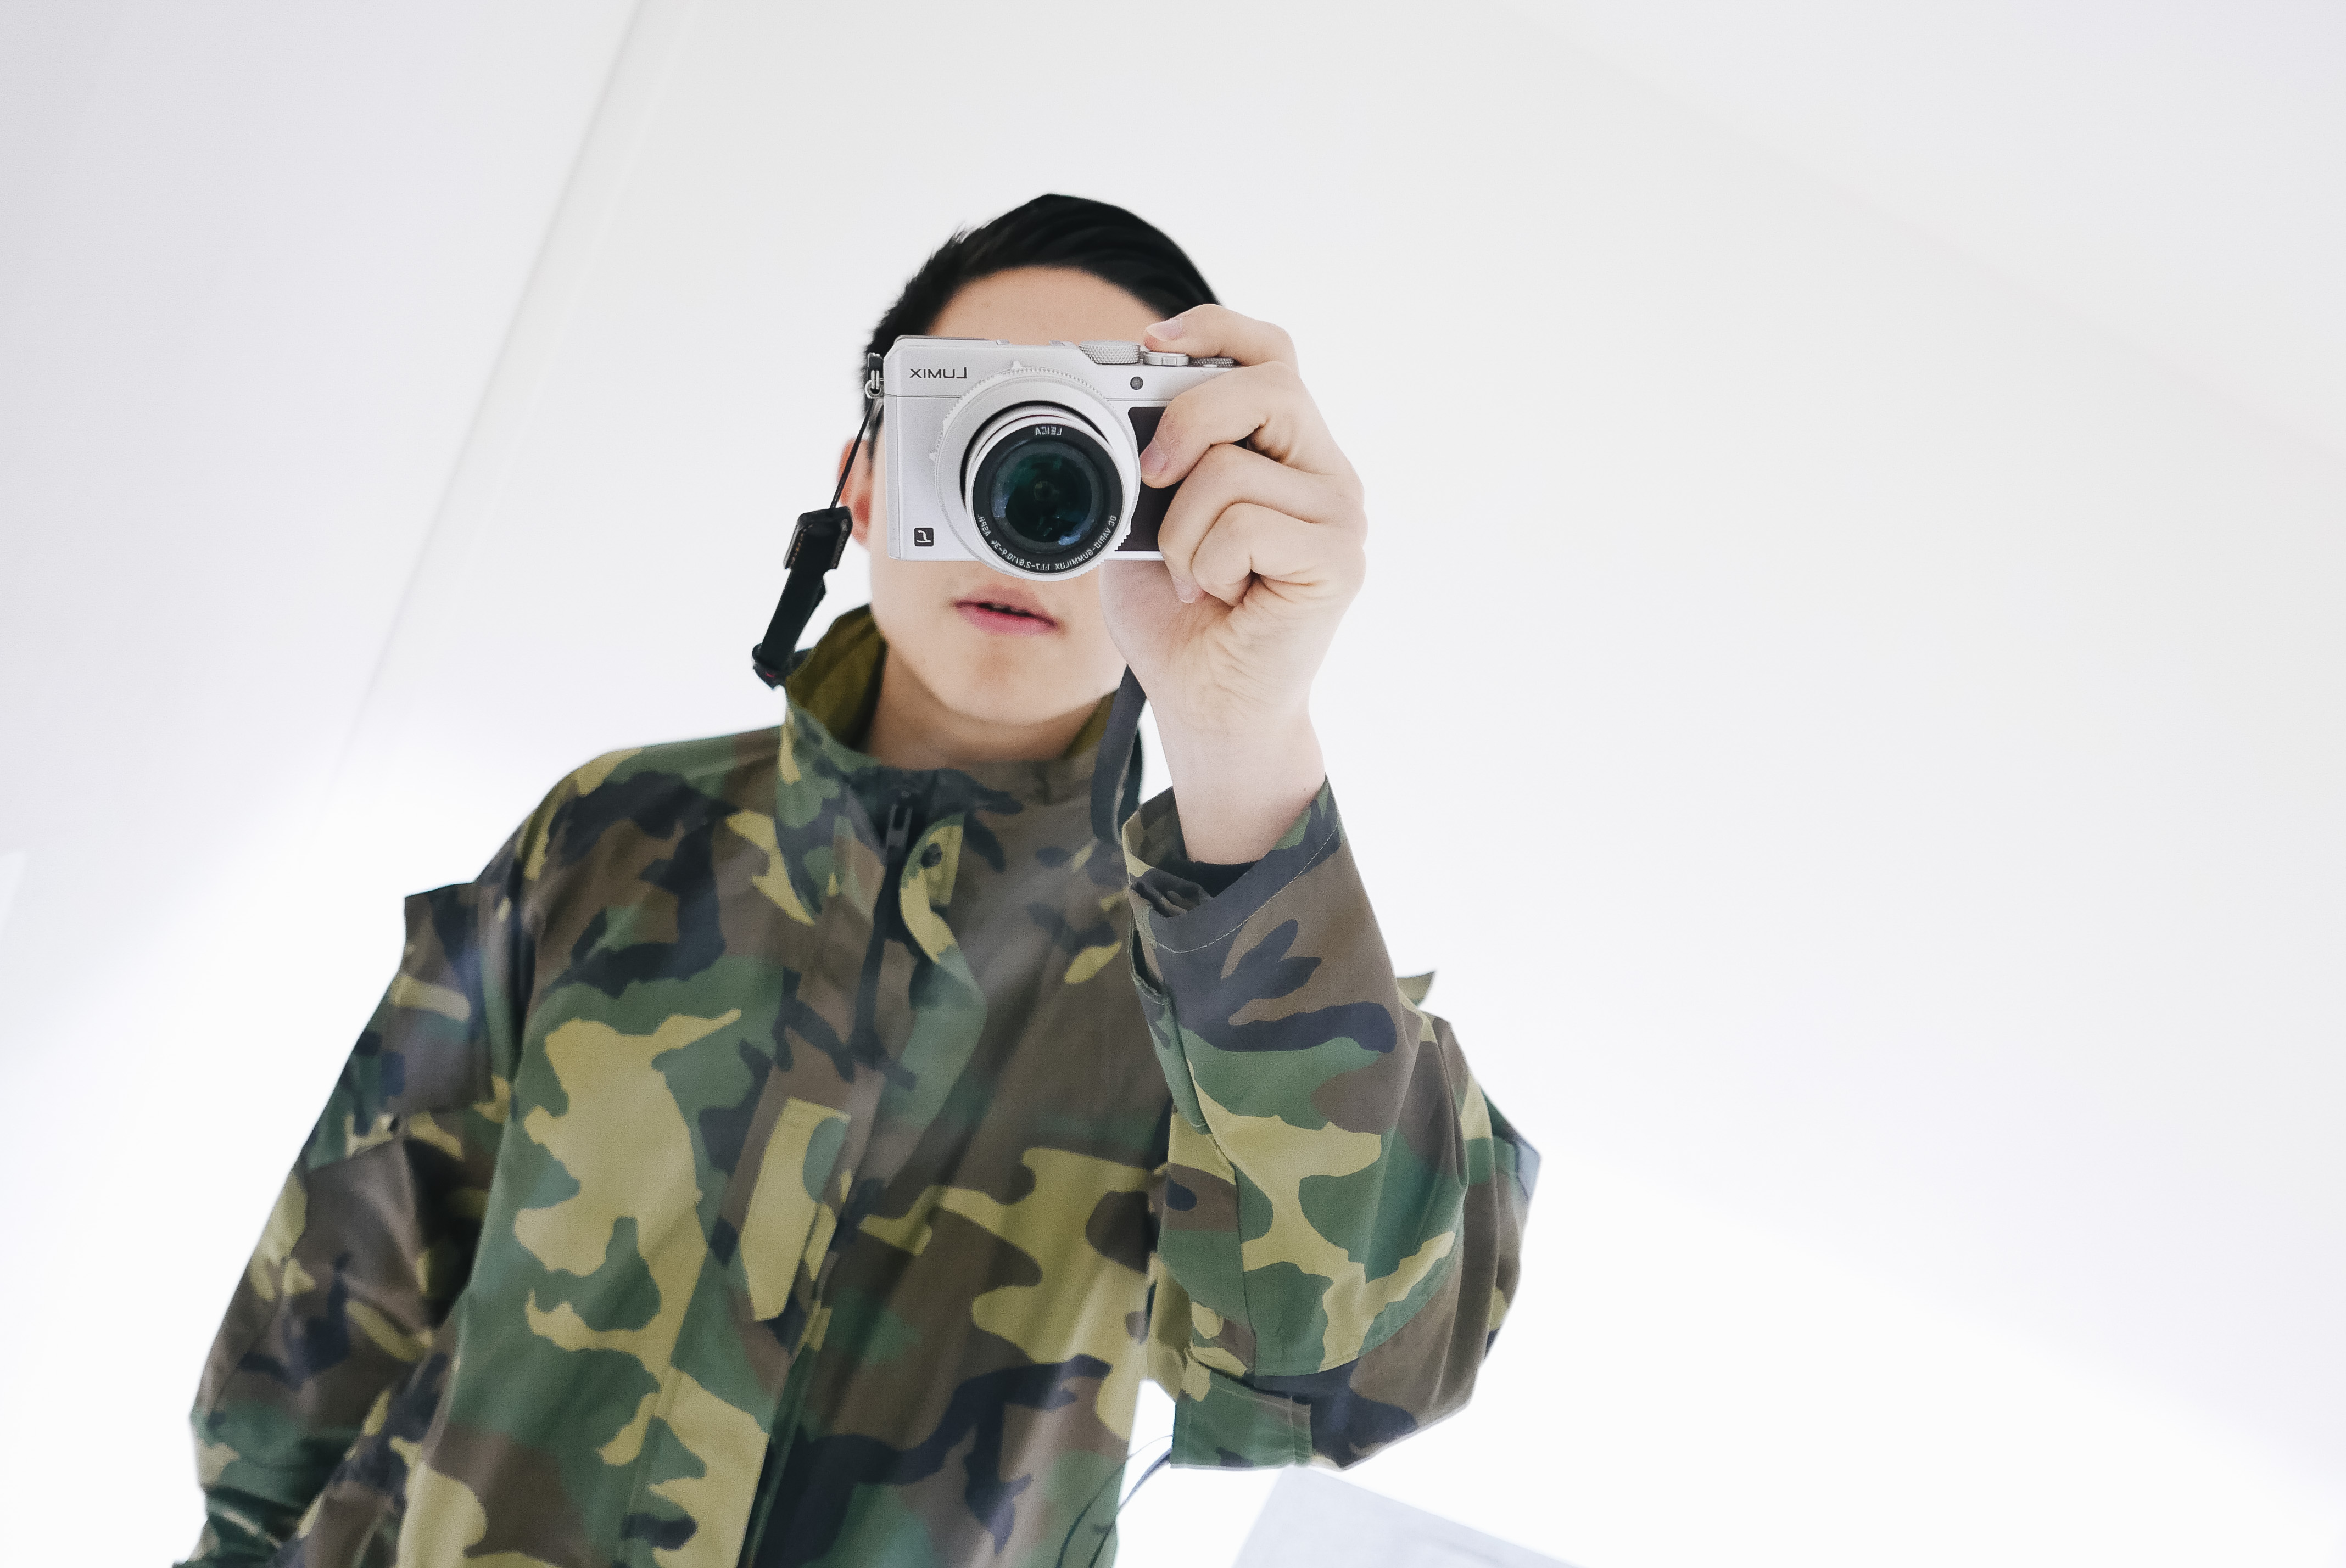 lumix lx100 selfie kyoto army camo